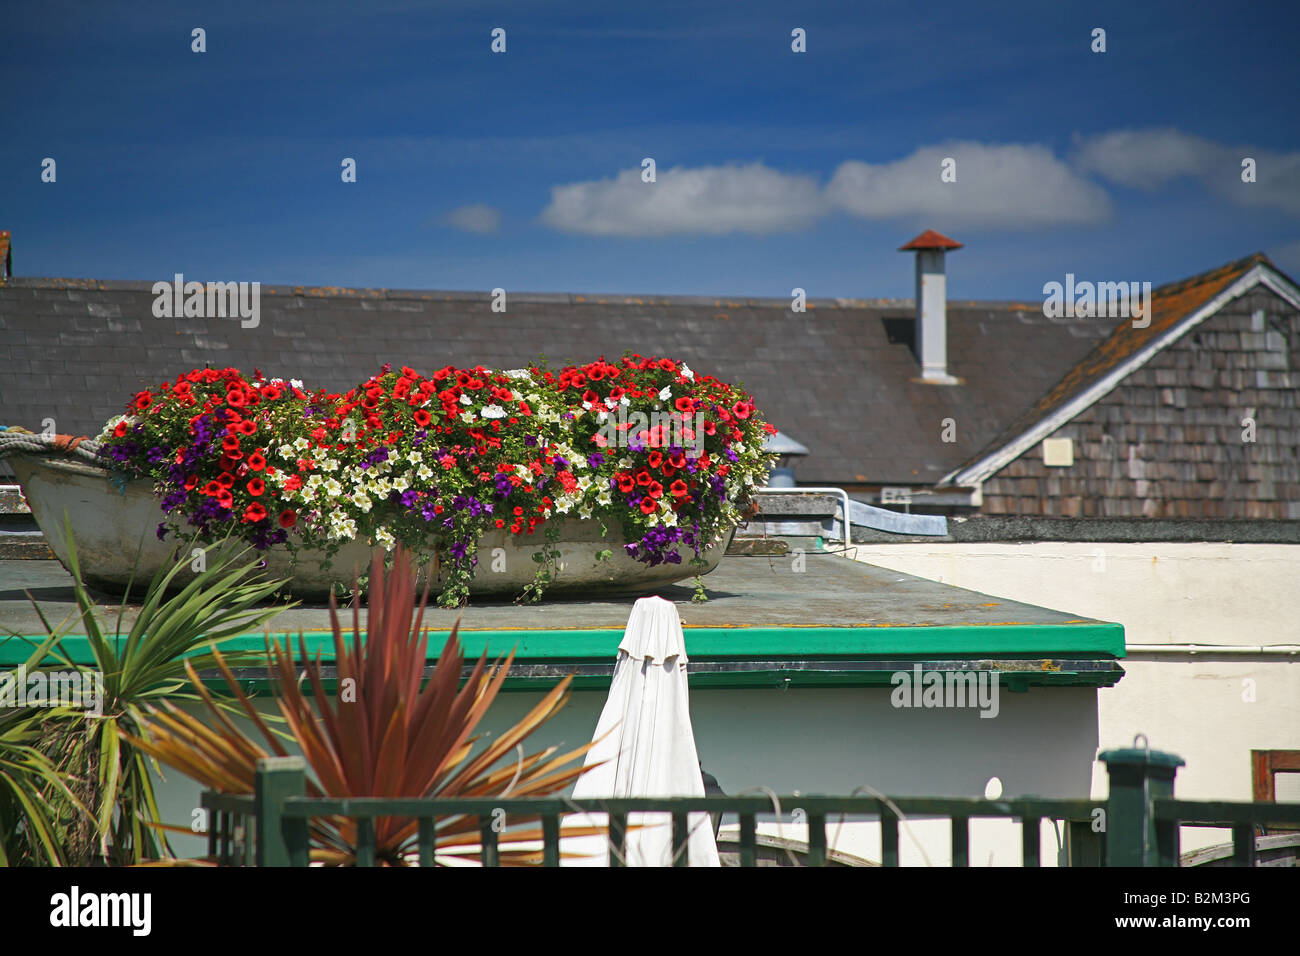 Floral display in old plastic boat on roof of garage, Lyme Regis, Dorset UK Stock Photo